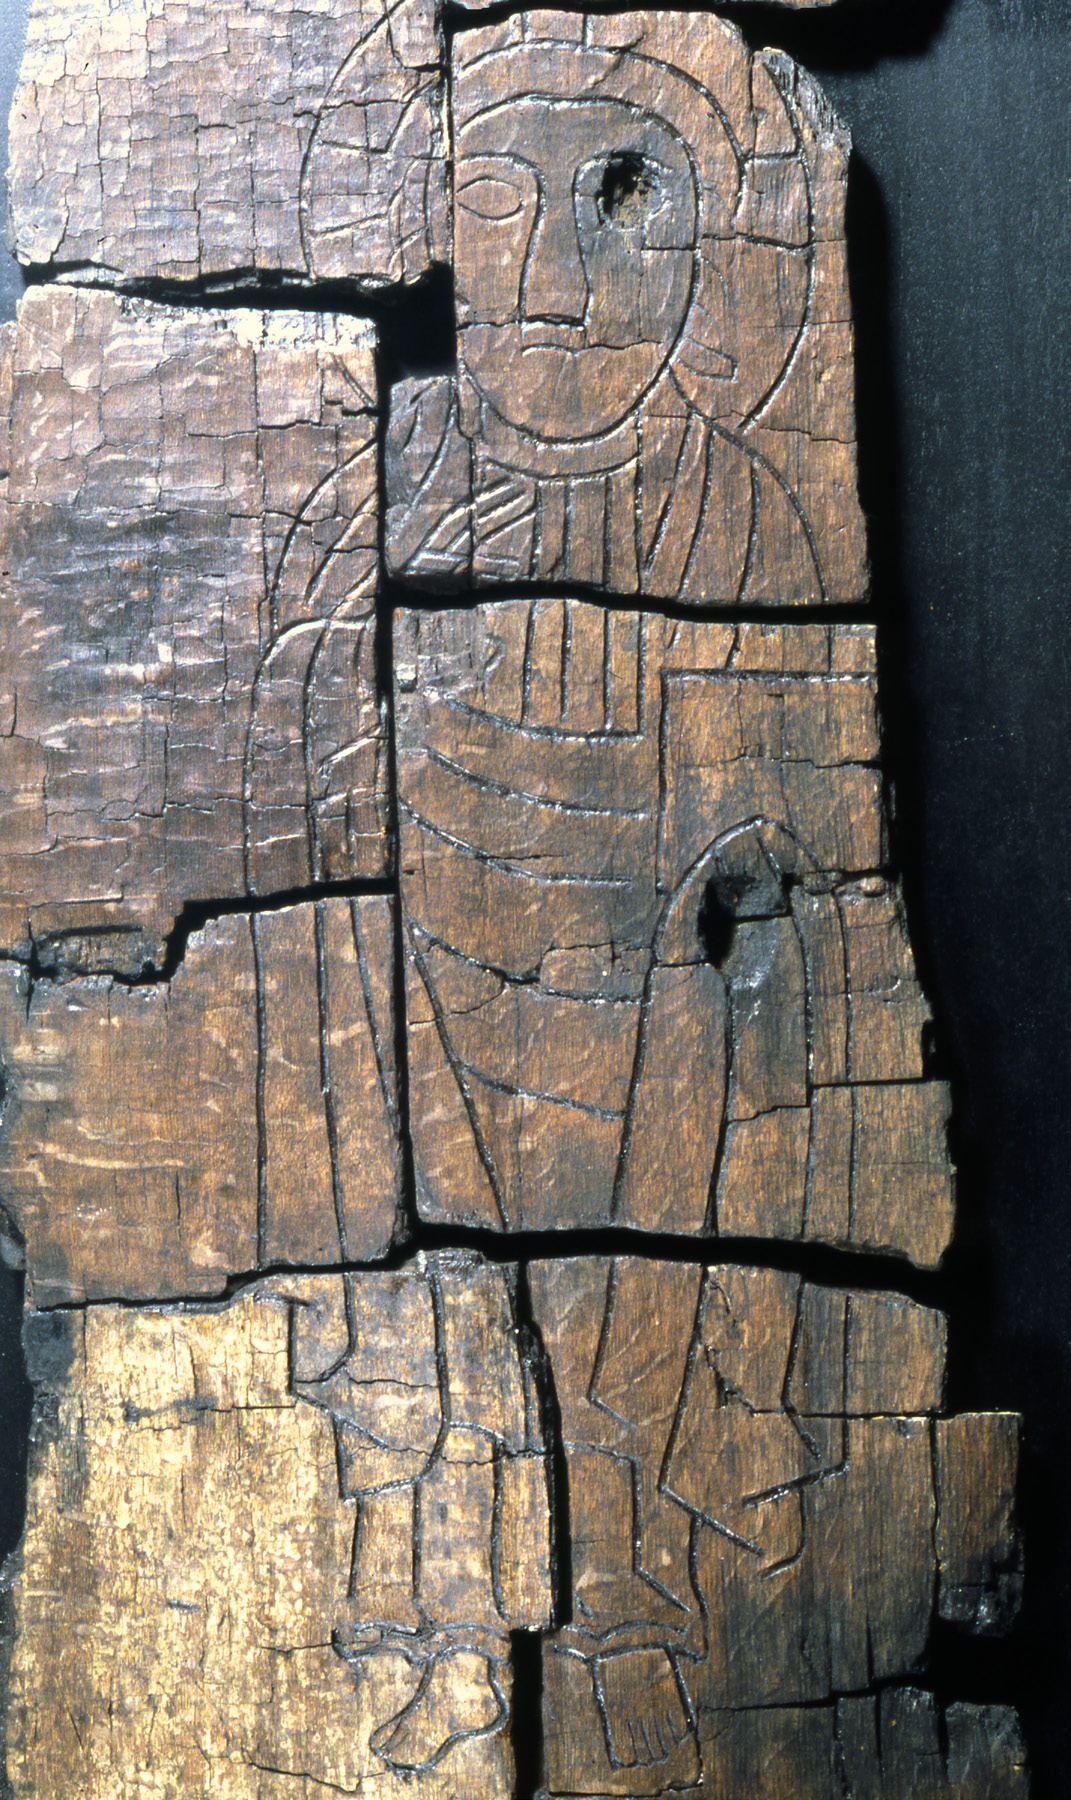 Wooden Anglo Saxon Rune Stones